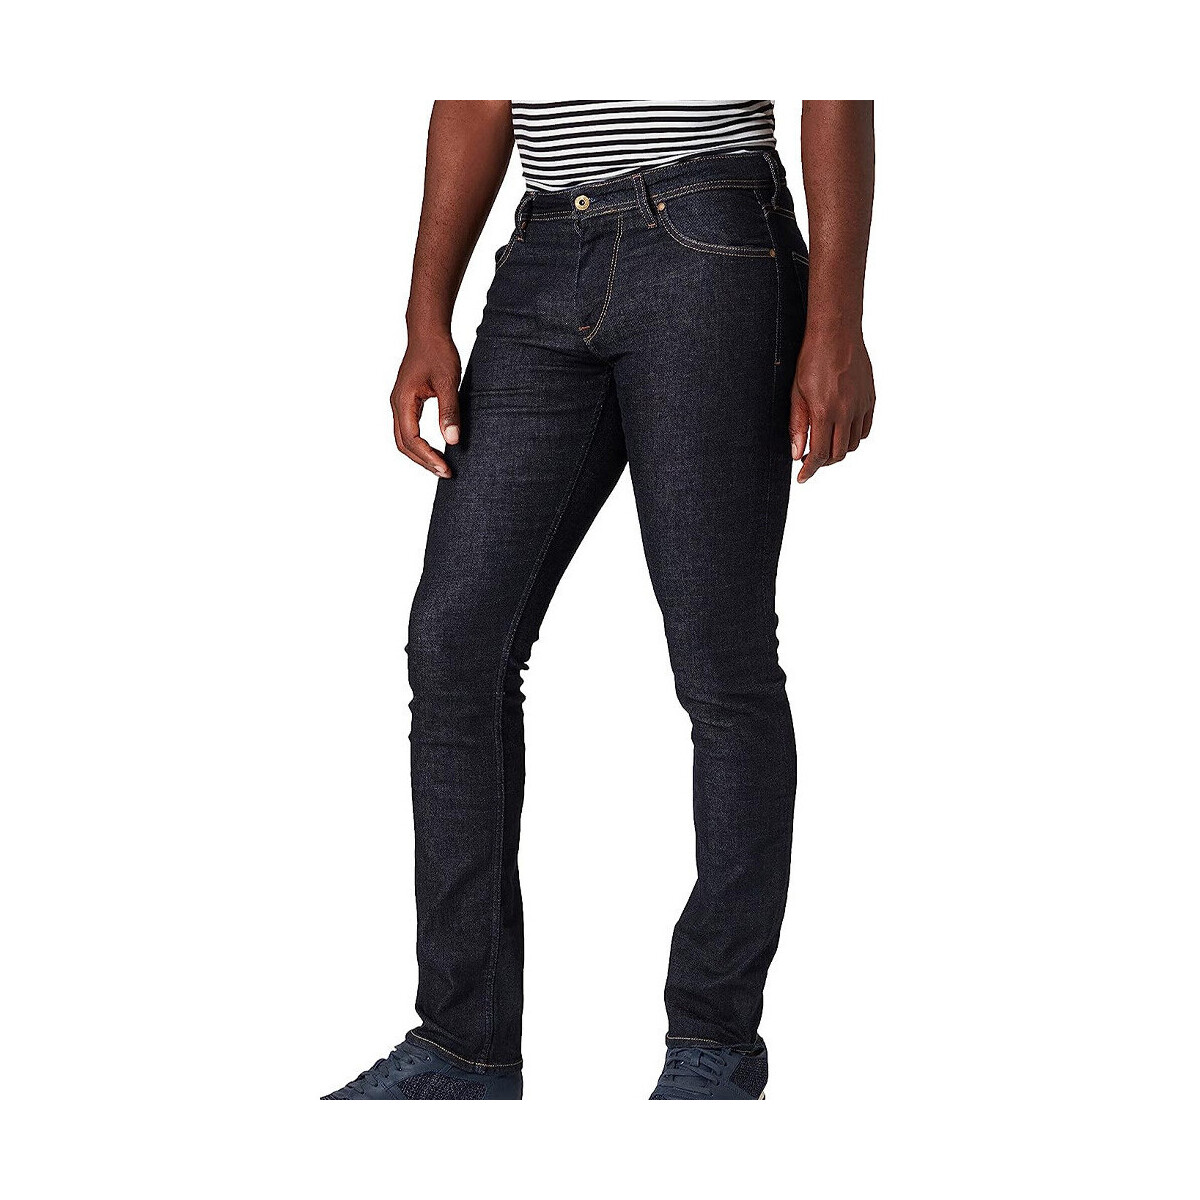 Textil Homem Calças Jeans Pepe jeans  Preto